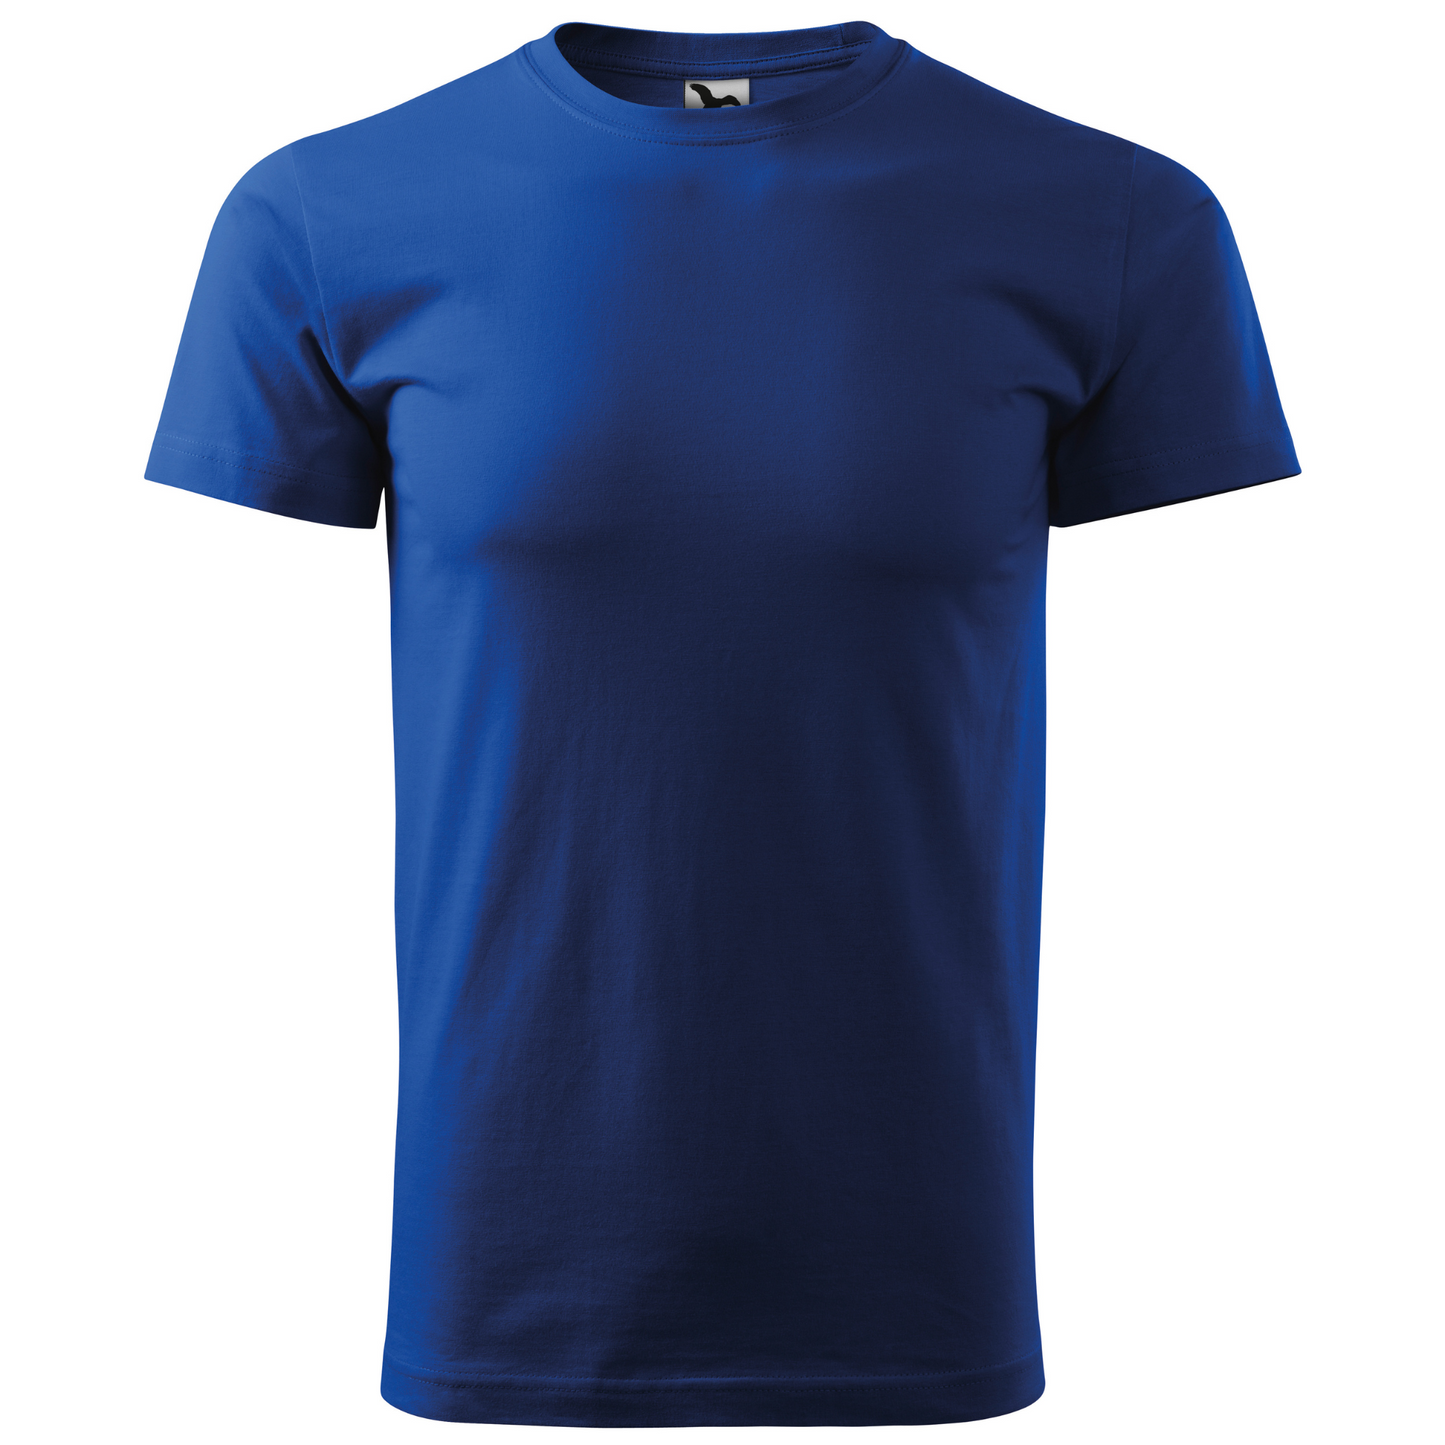 Tricou barbat - Variații Albastru